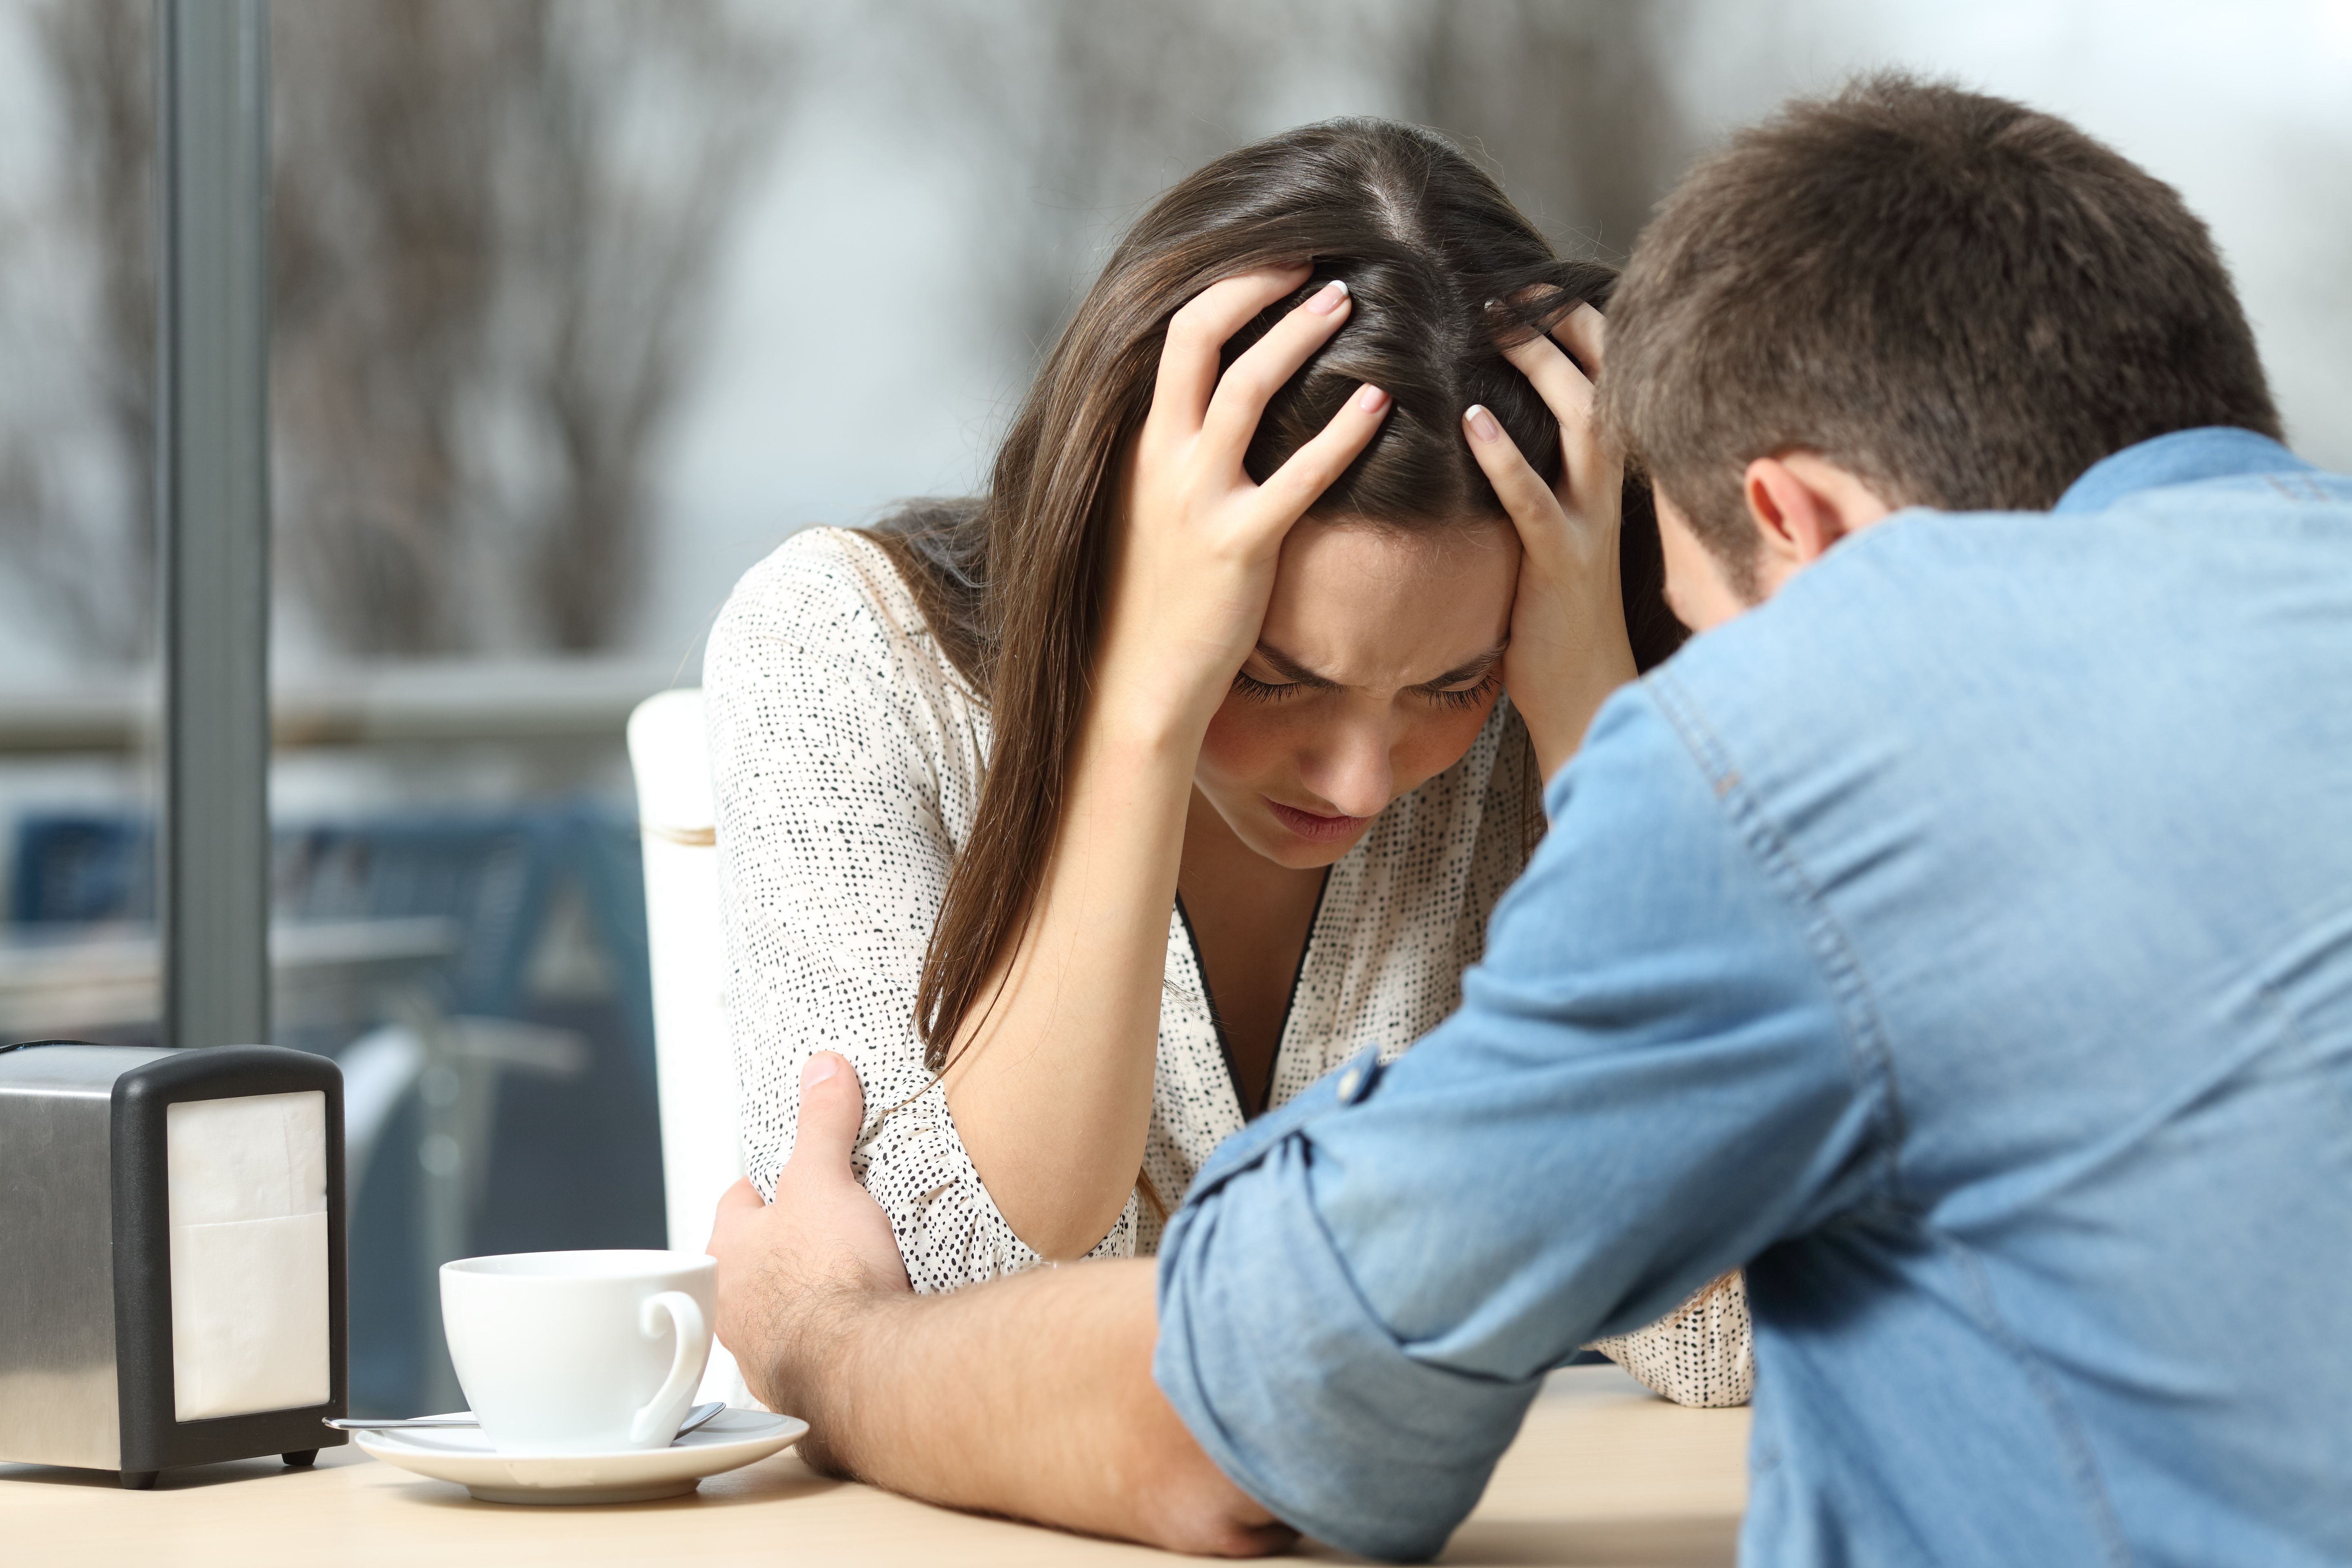 A man and a woman talk after an argument. | Source: Shutterstock